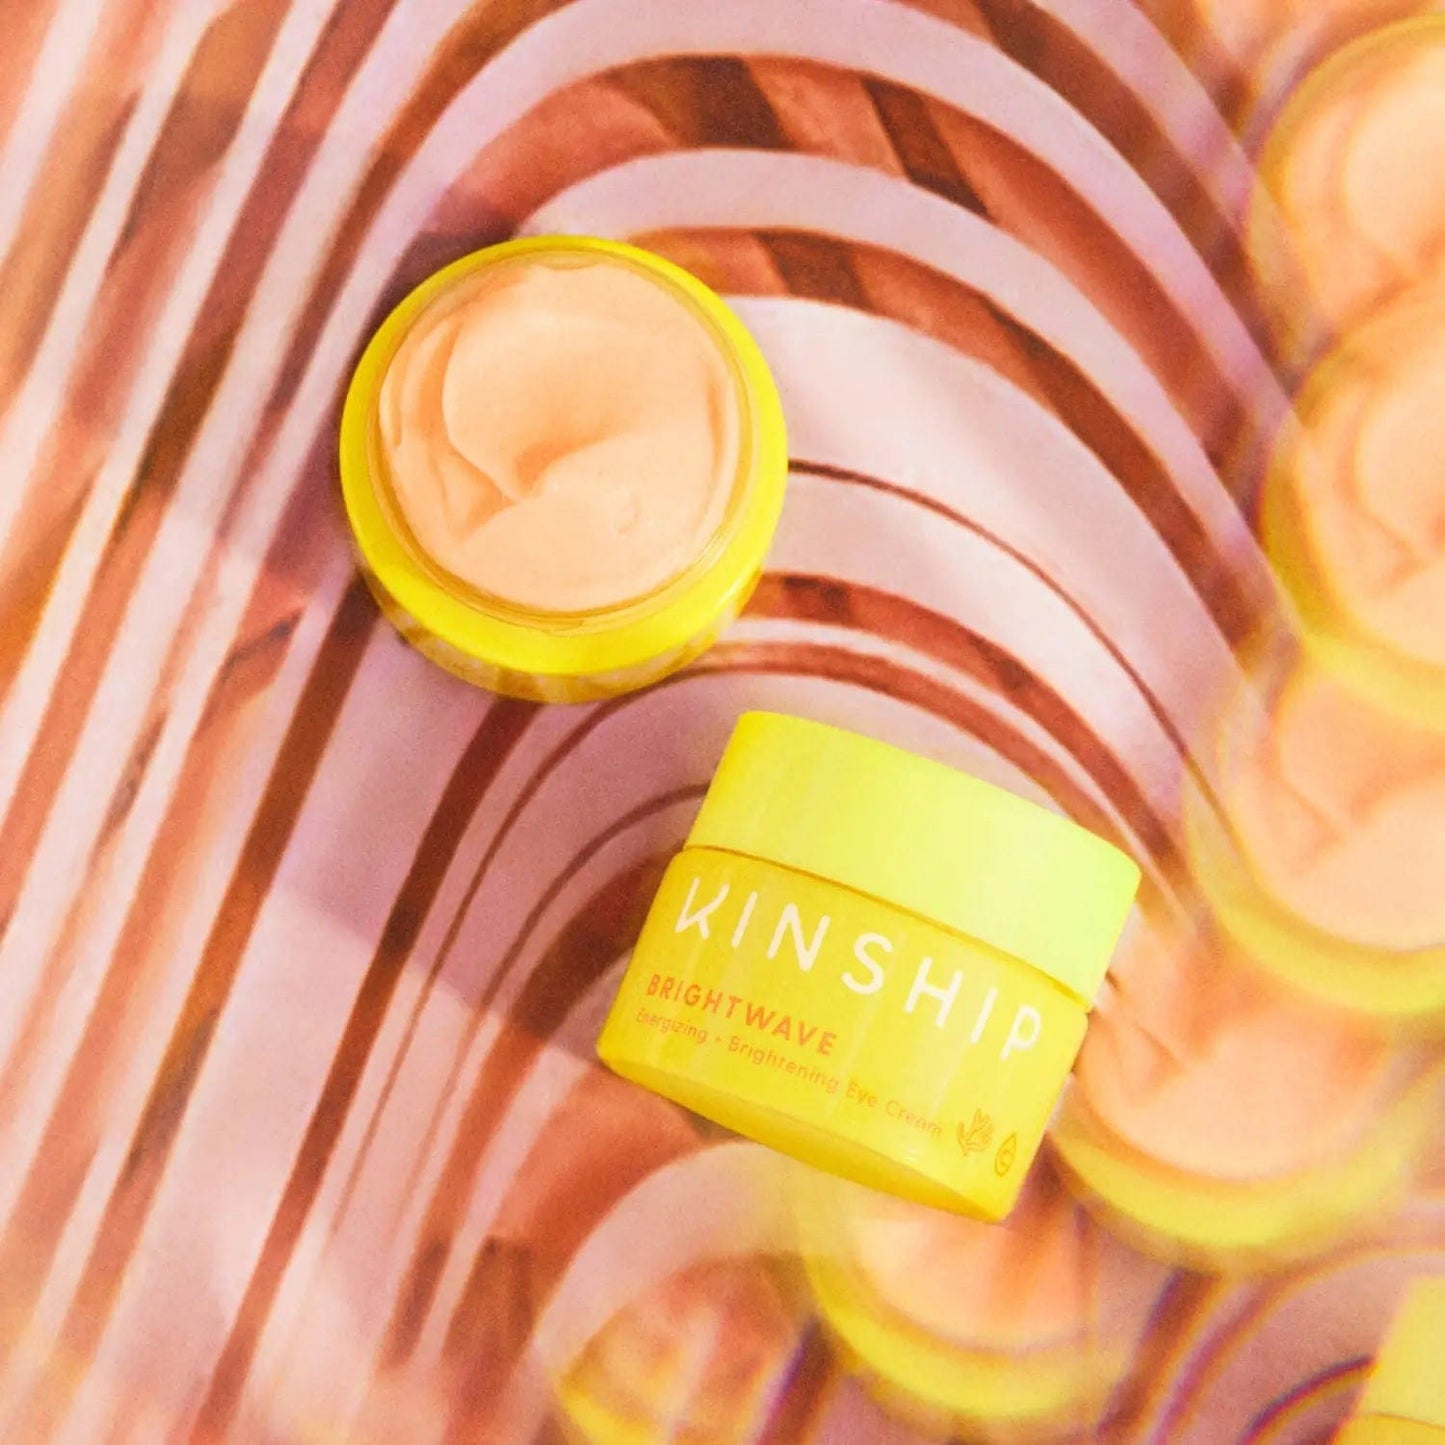 Kinship Beauty Kinship Brightwave Vitamin C Energizing and Brightening Eye Cream 15ml